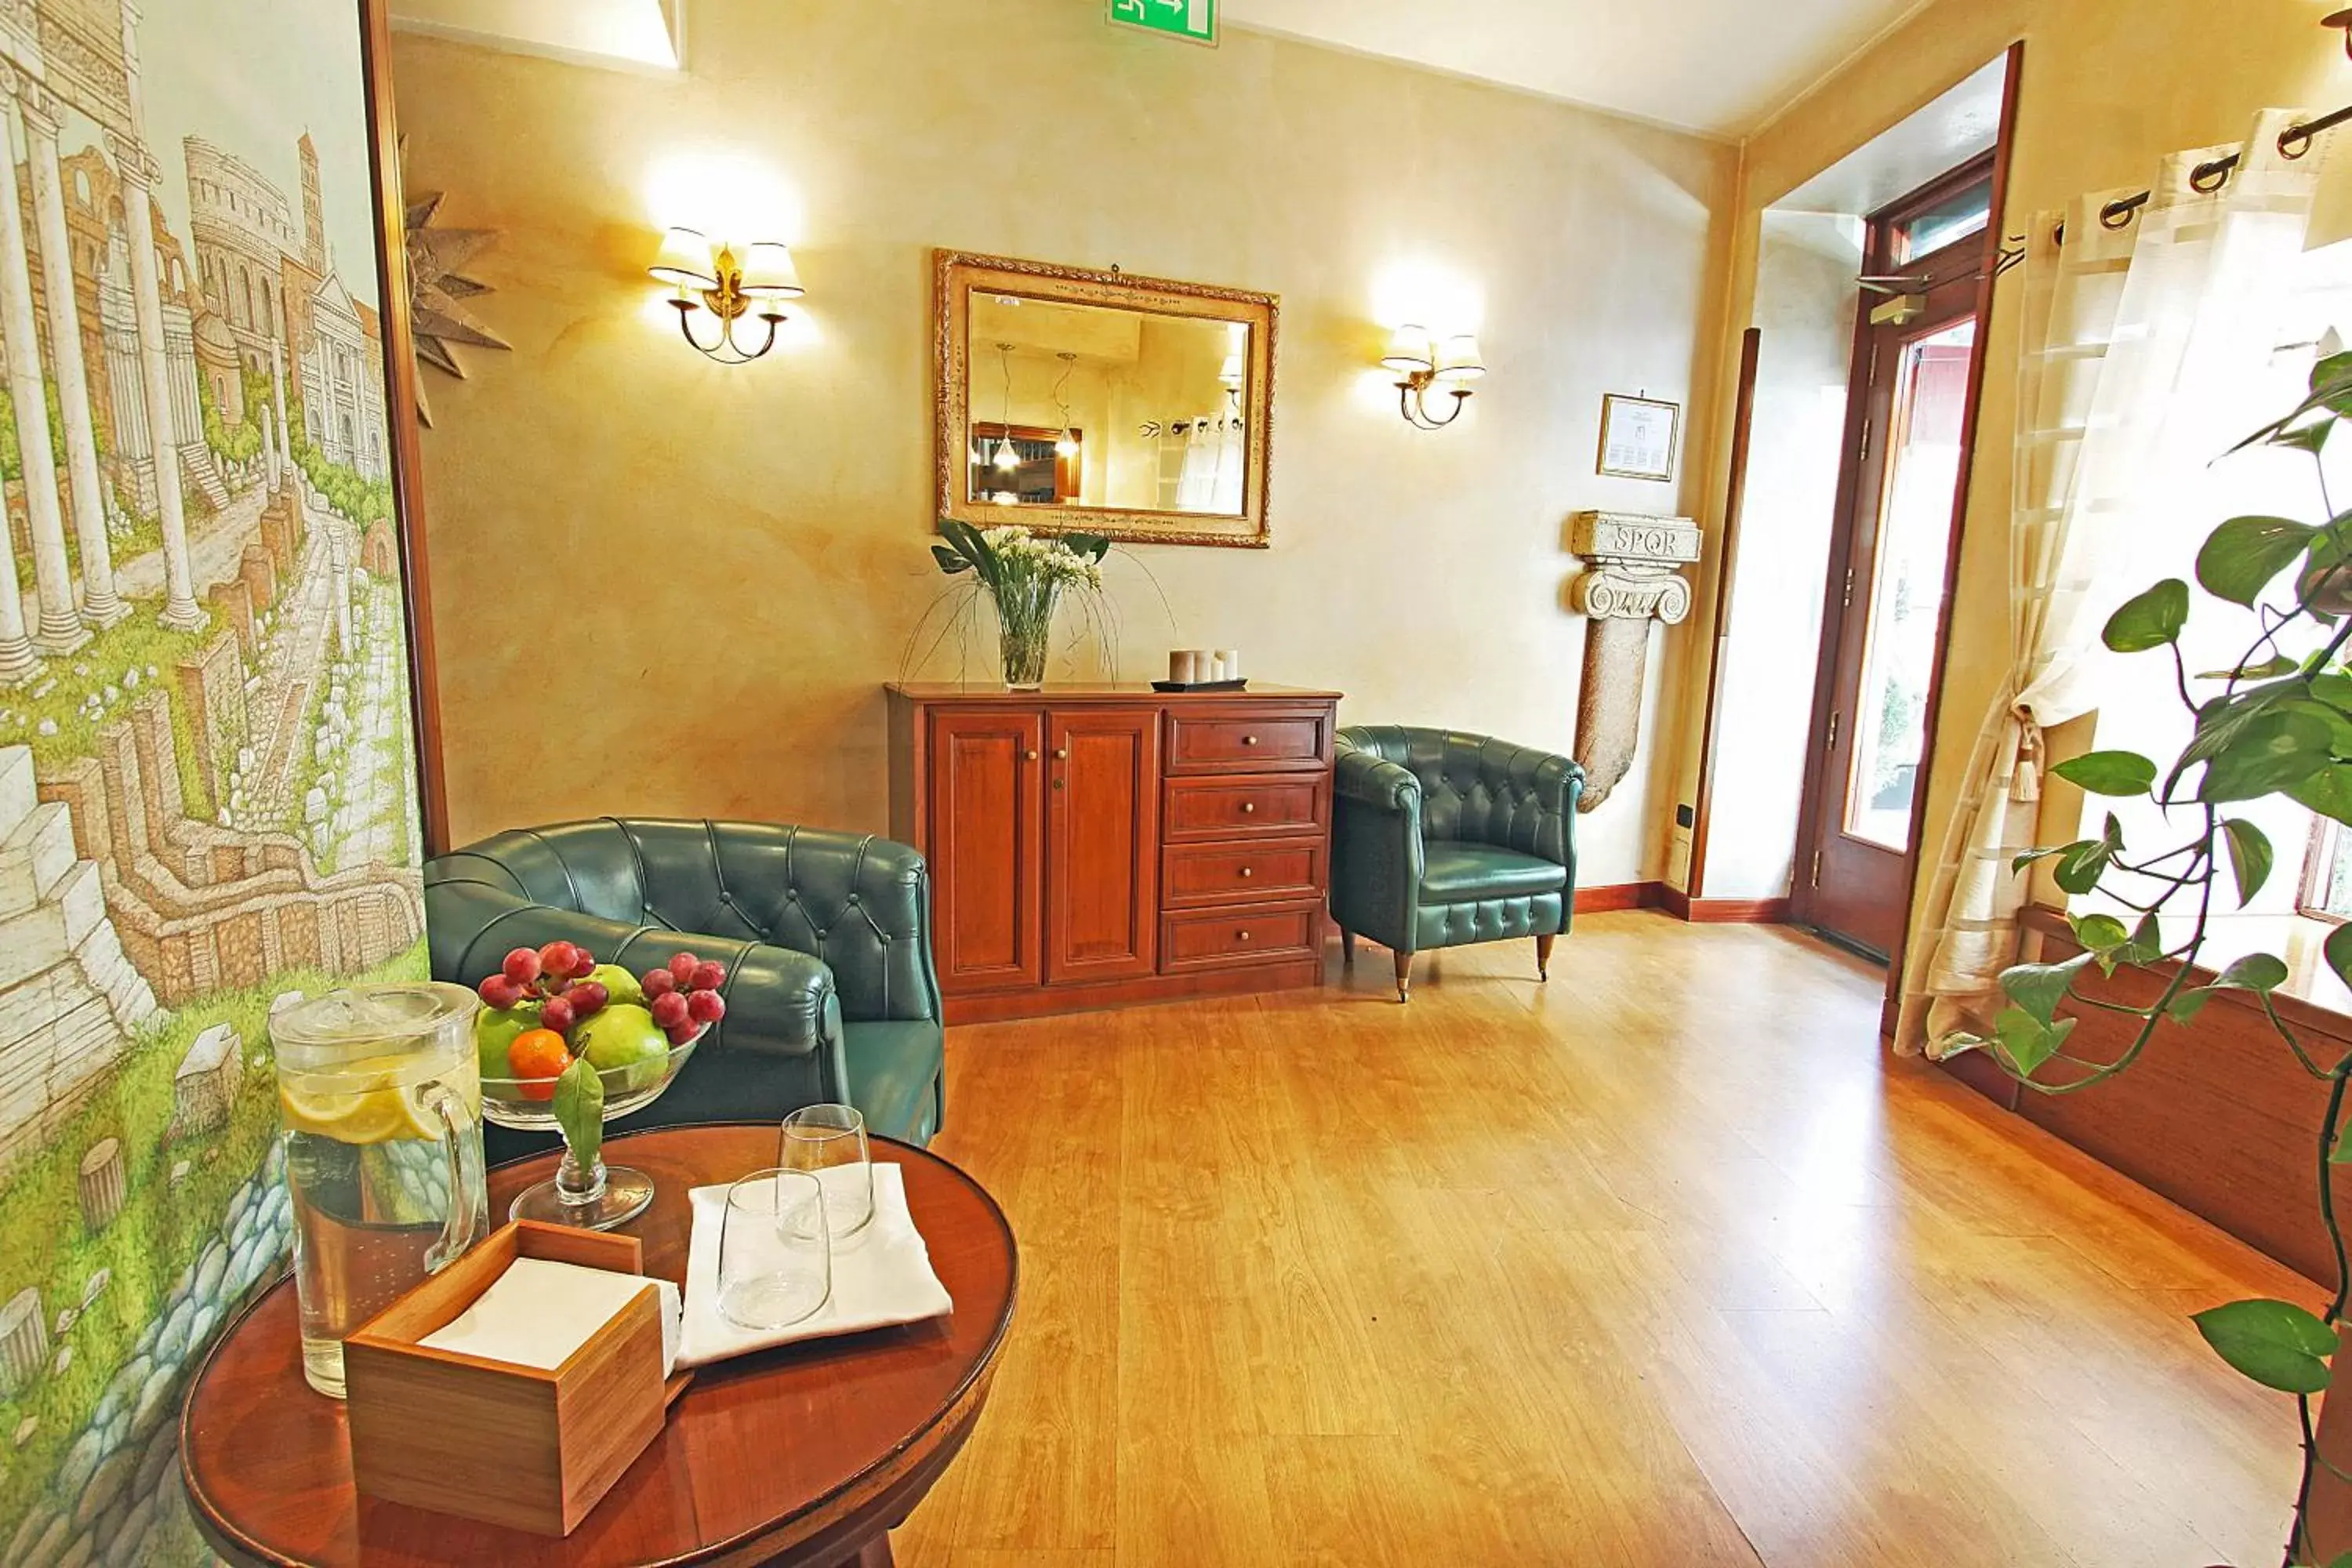 Lobby or reception in Hotel La Fenice